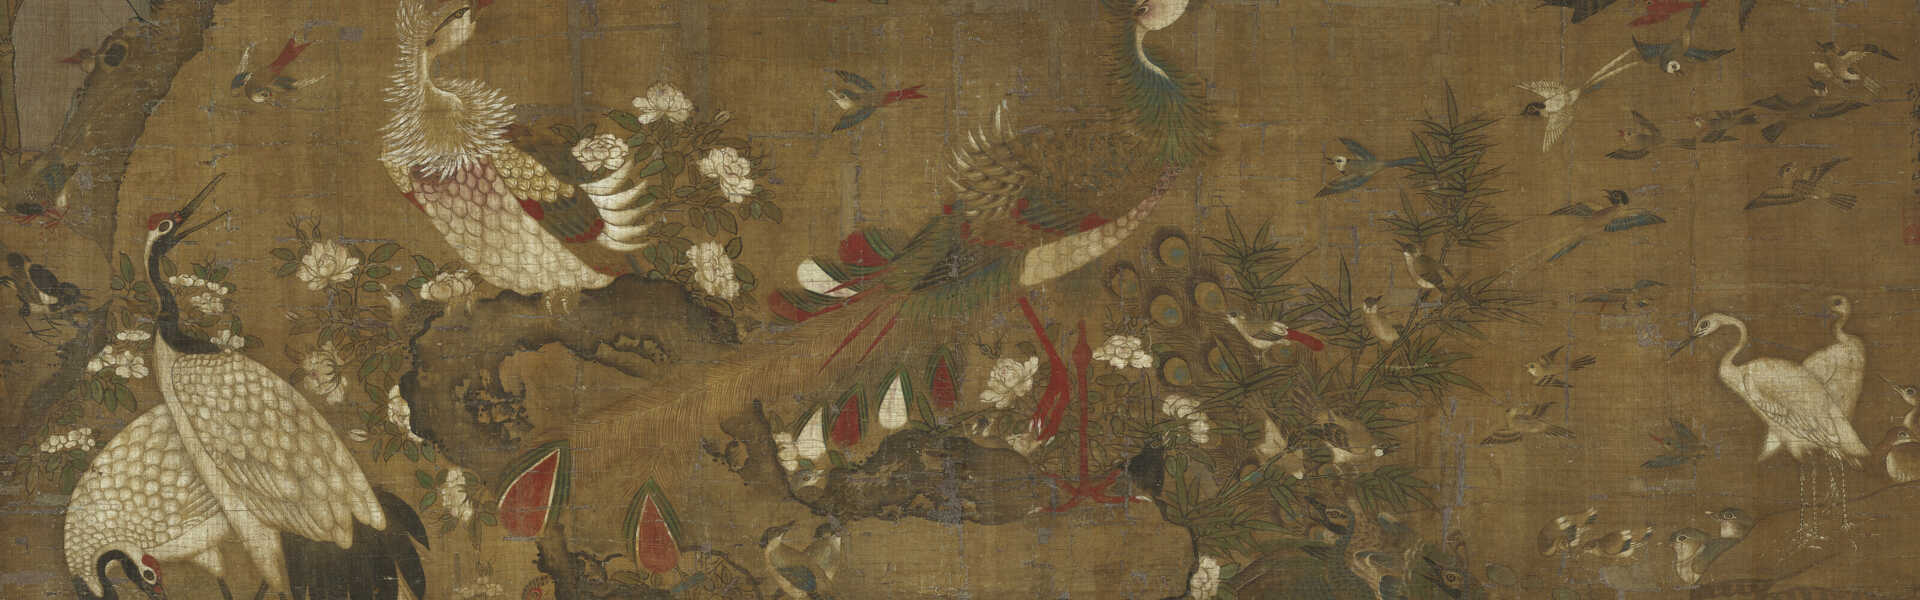 CHEN XIAOSHAN (15TH-16TH CENTURY)